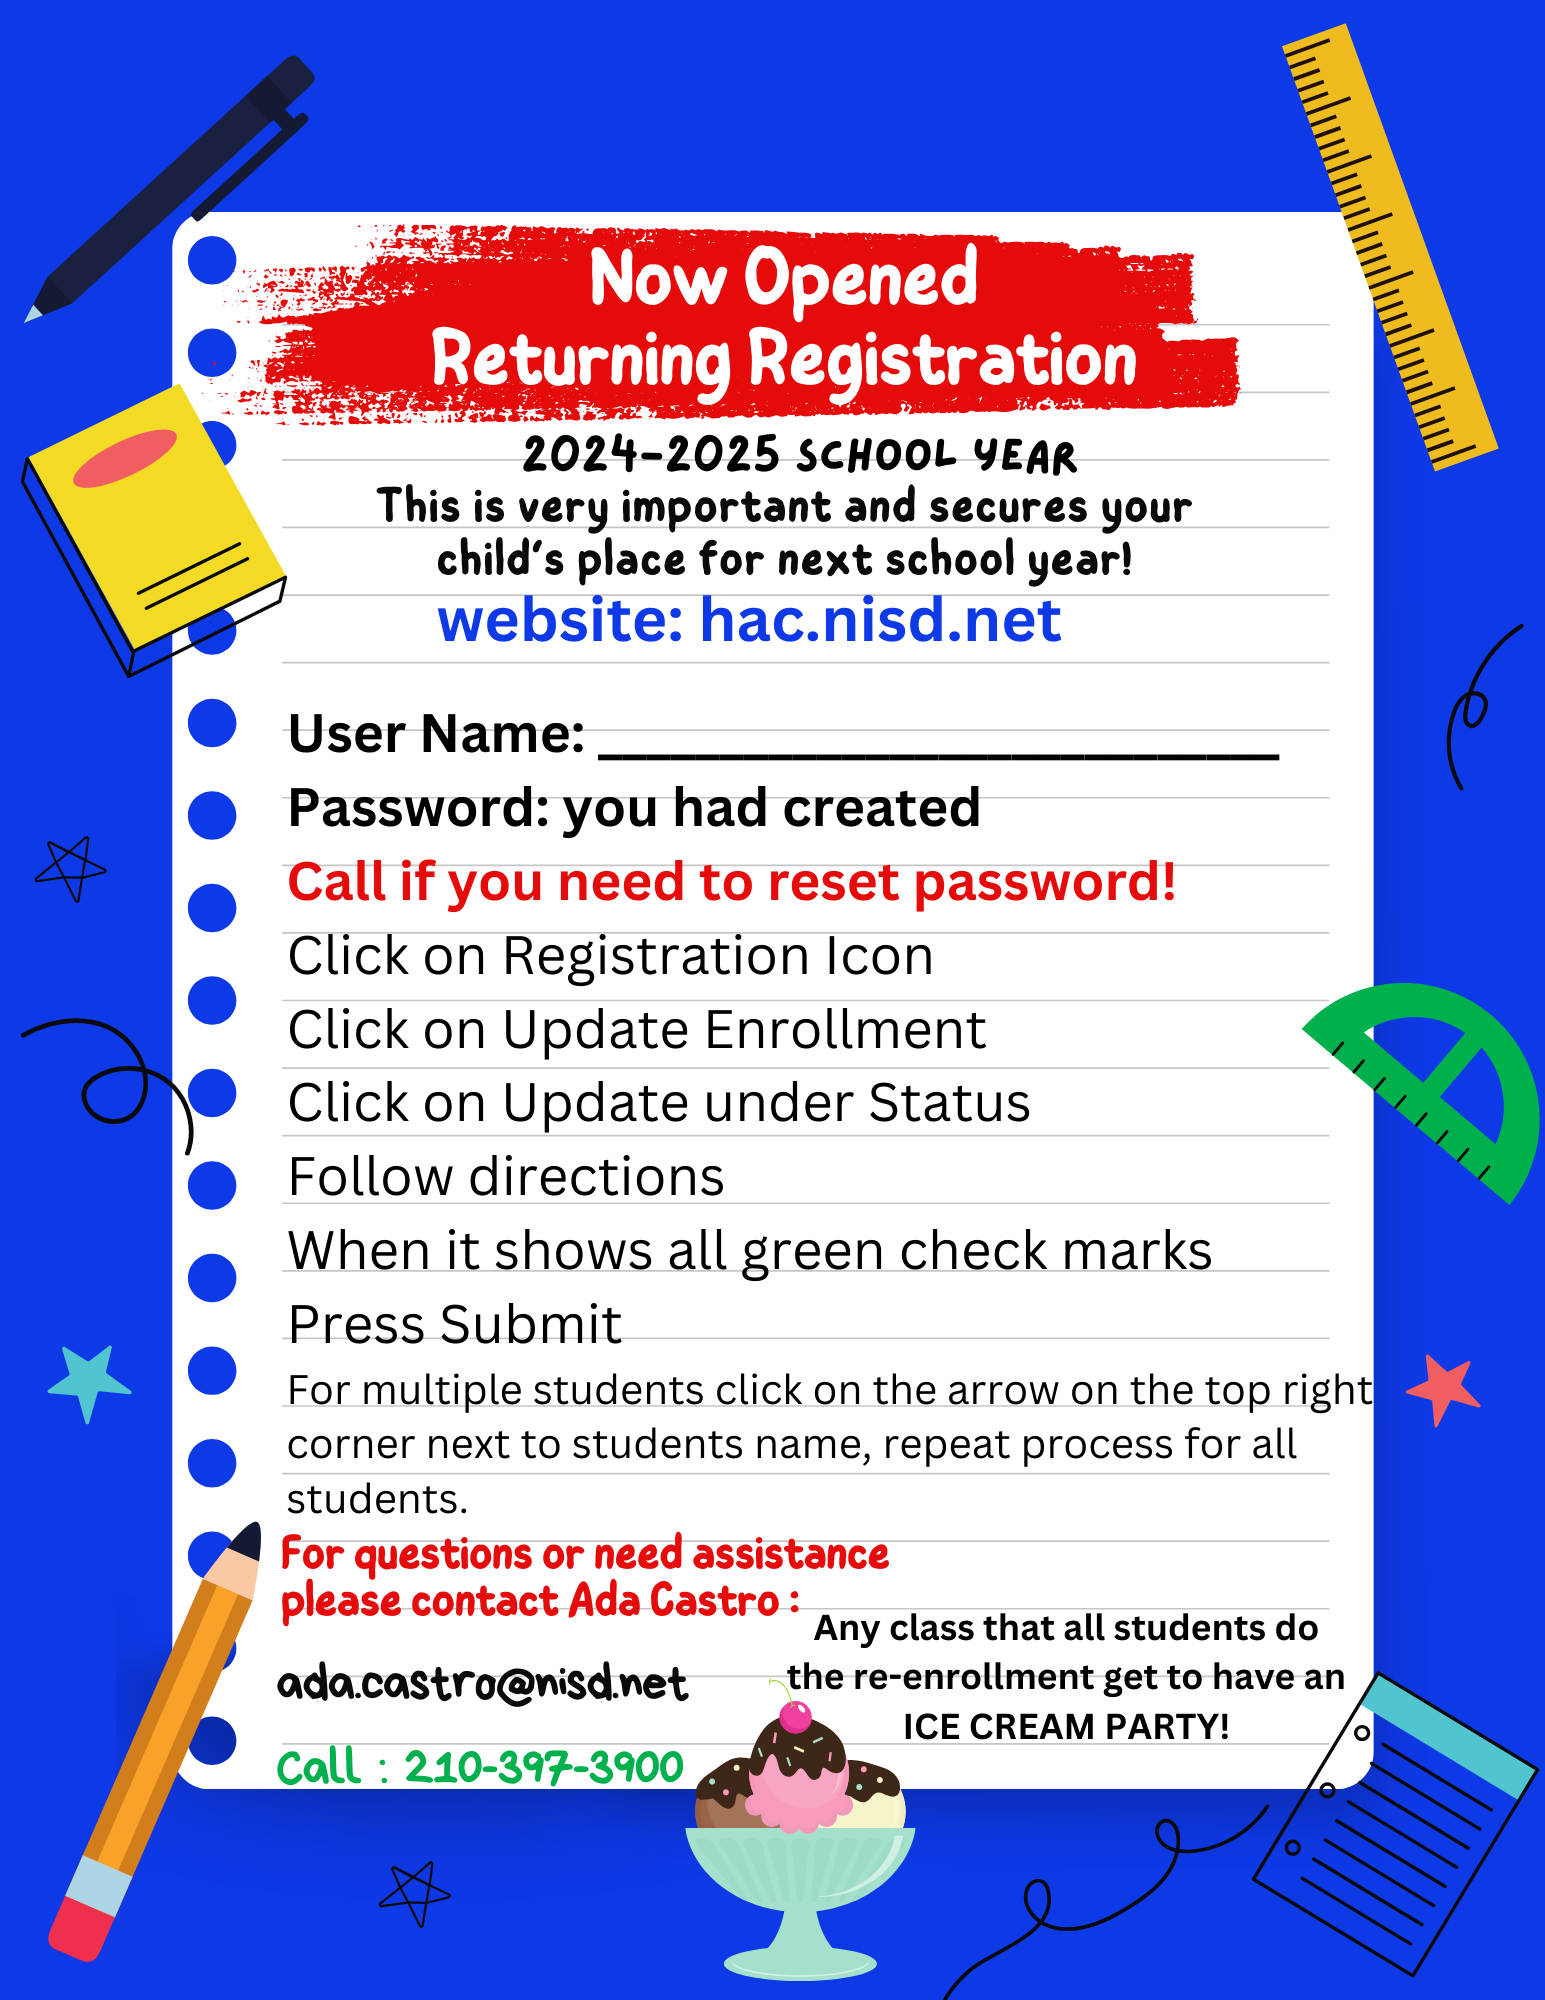 Registration Information